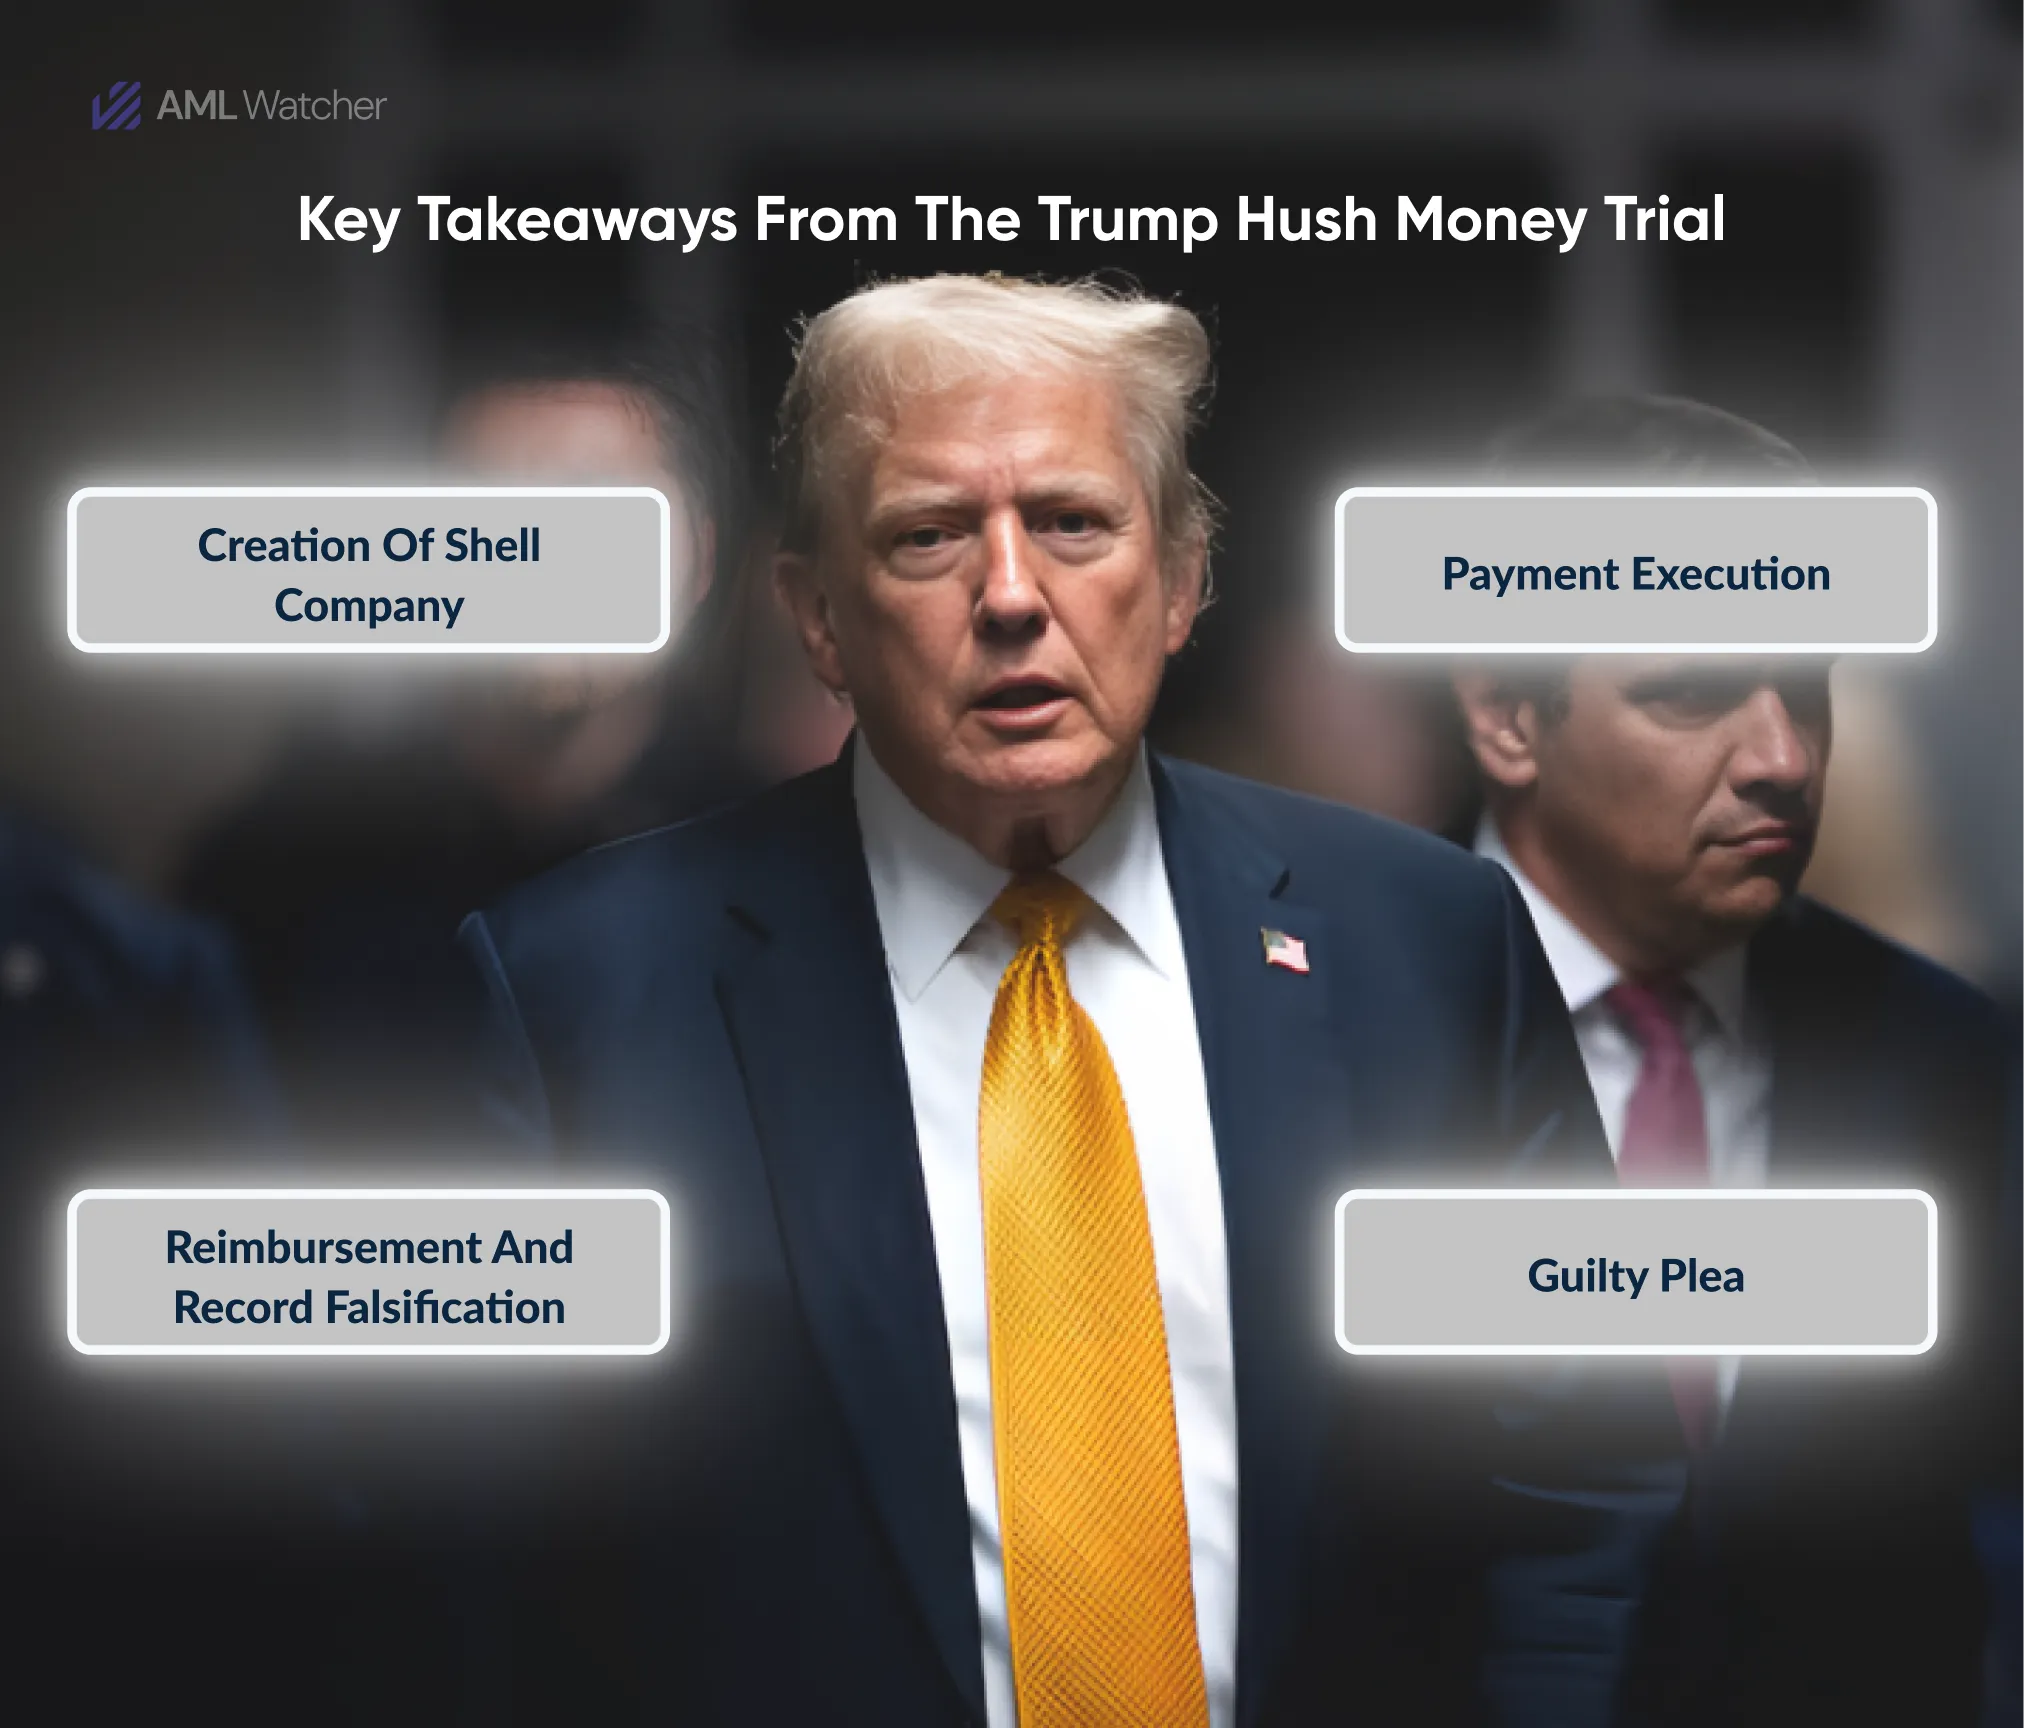 Key Takeaways from the Trump Hush Money Trial